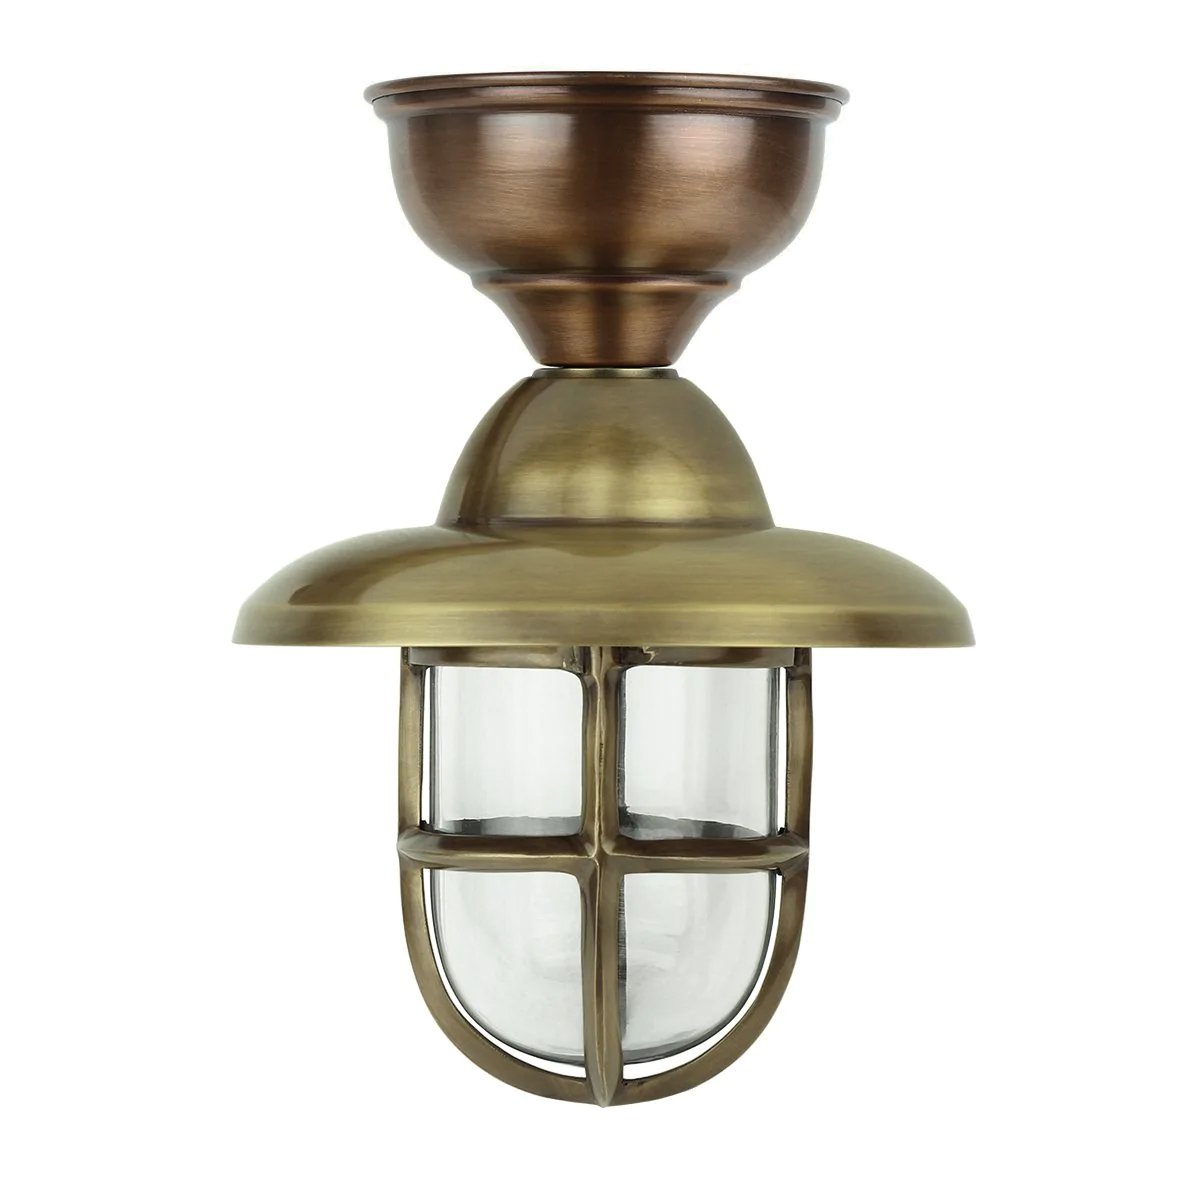 Outdoor Lighting Nautical Ship lamp Marine copper brass - 36 cm